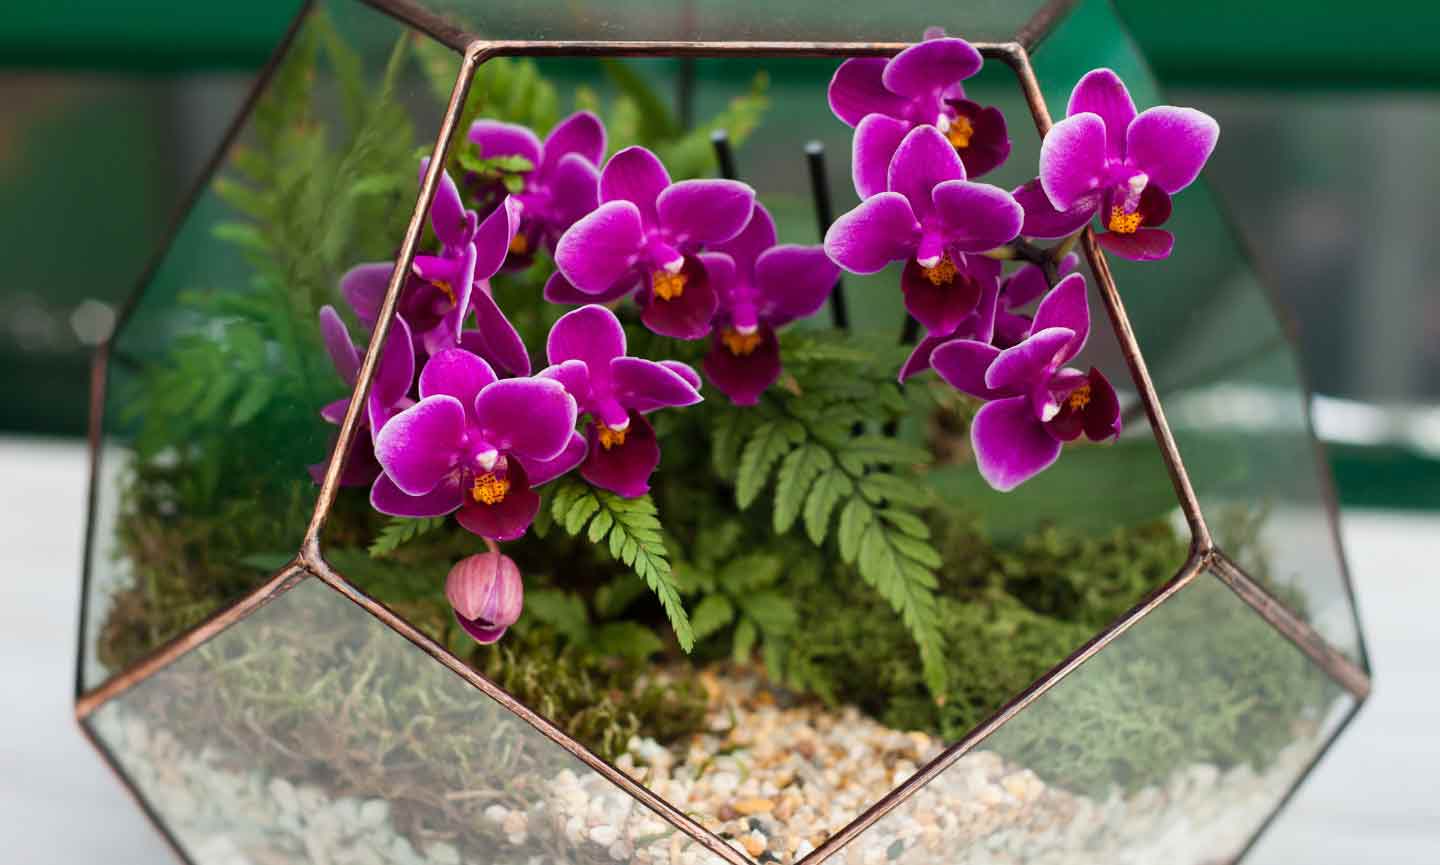 A purple orchid plant